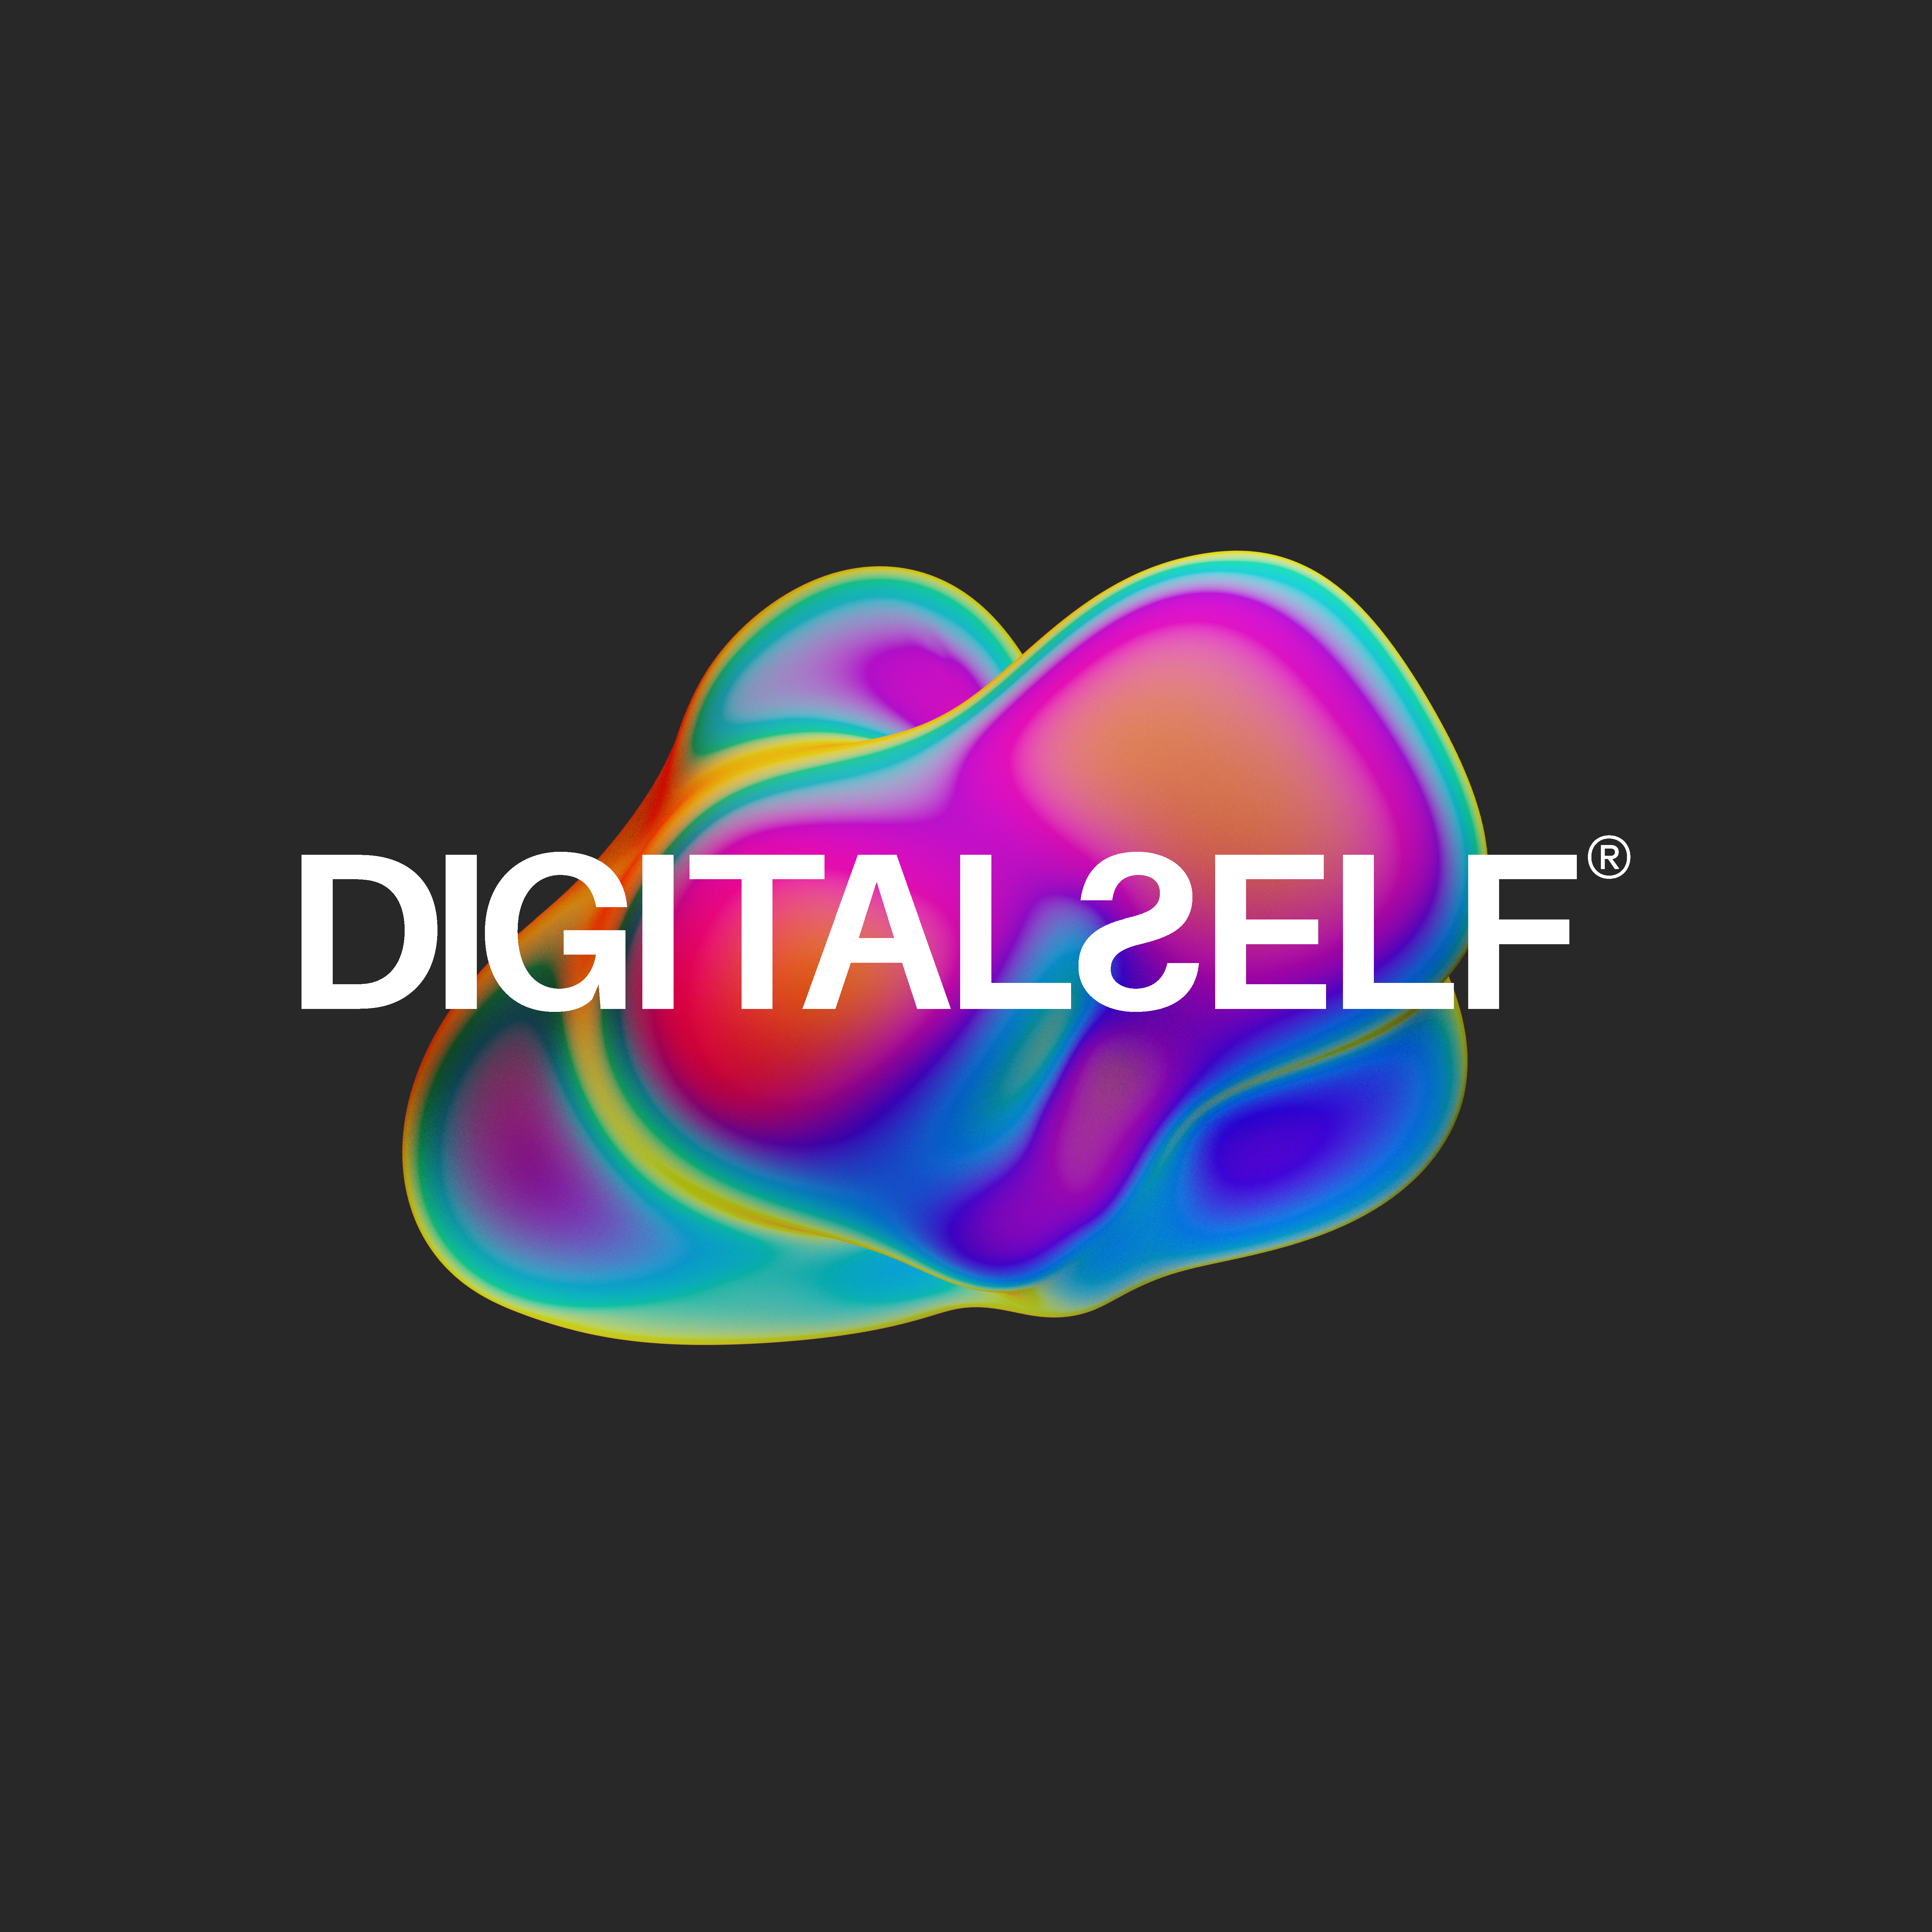 DigitalSelf